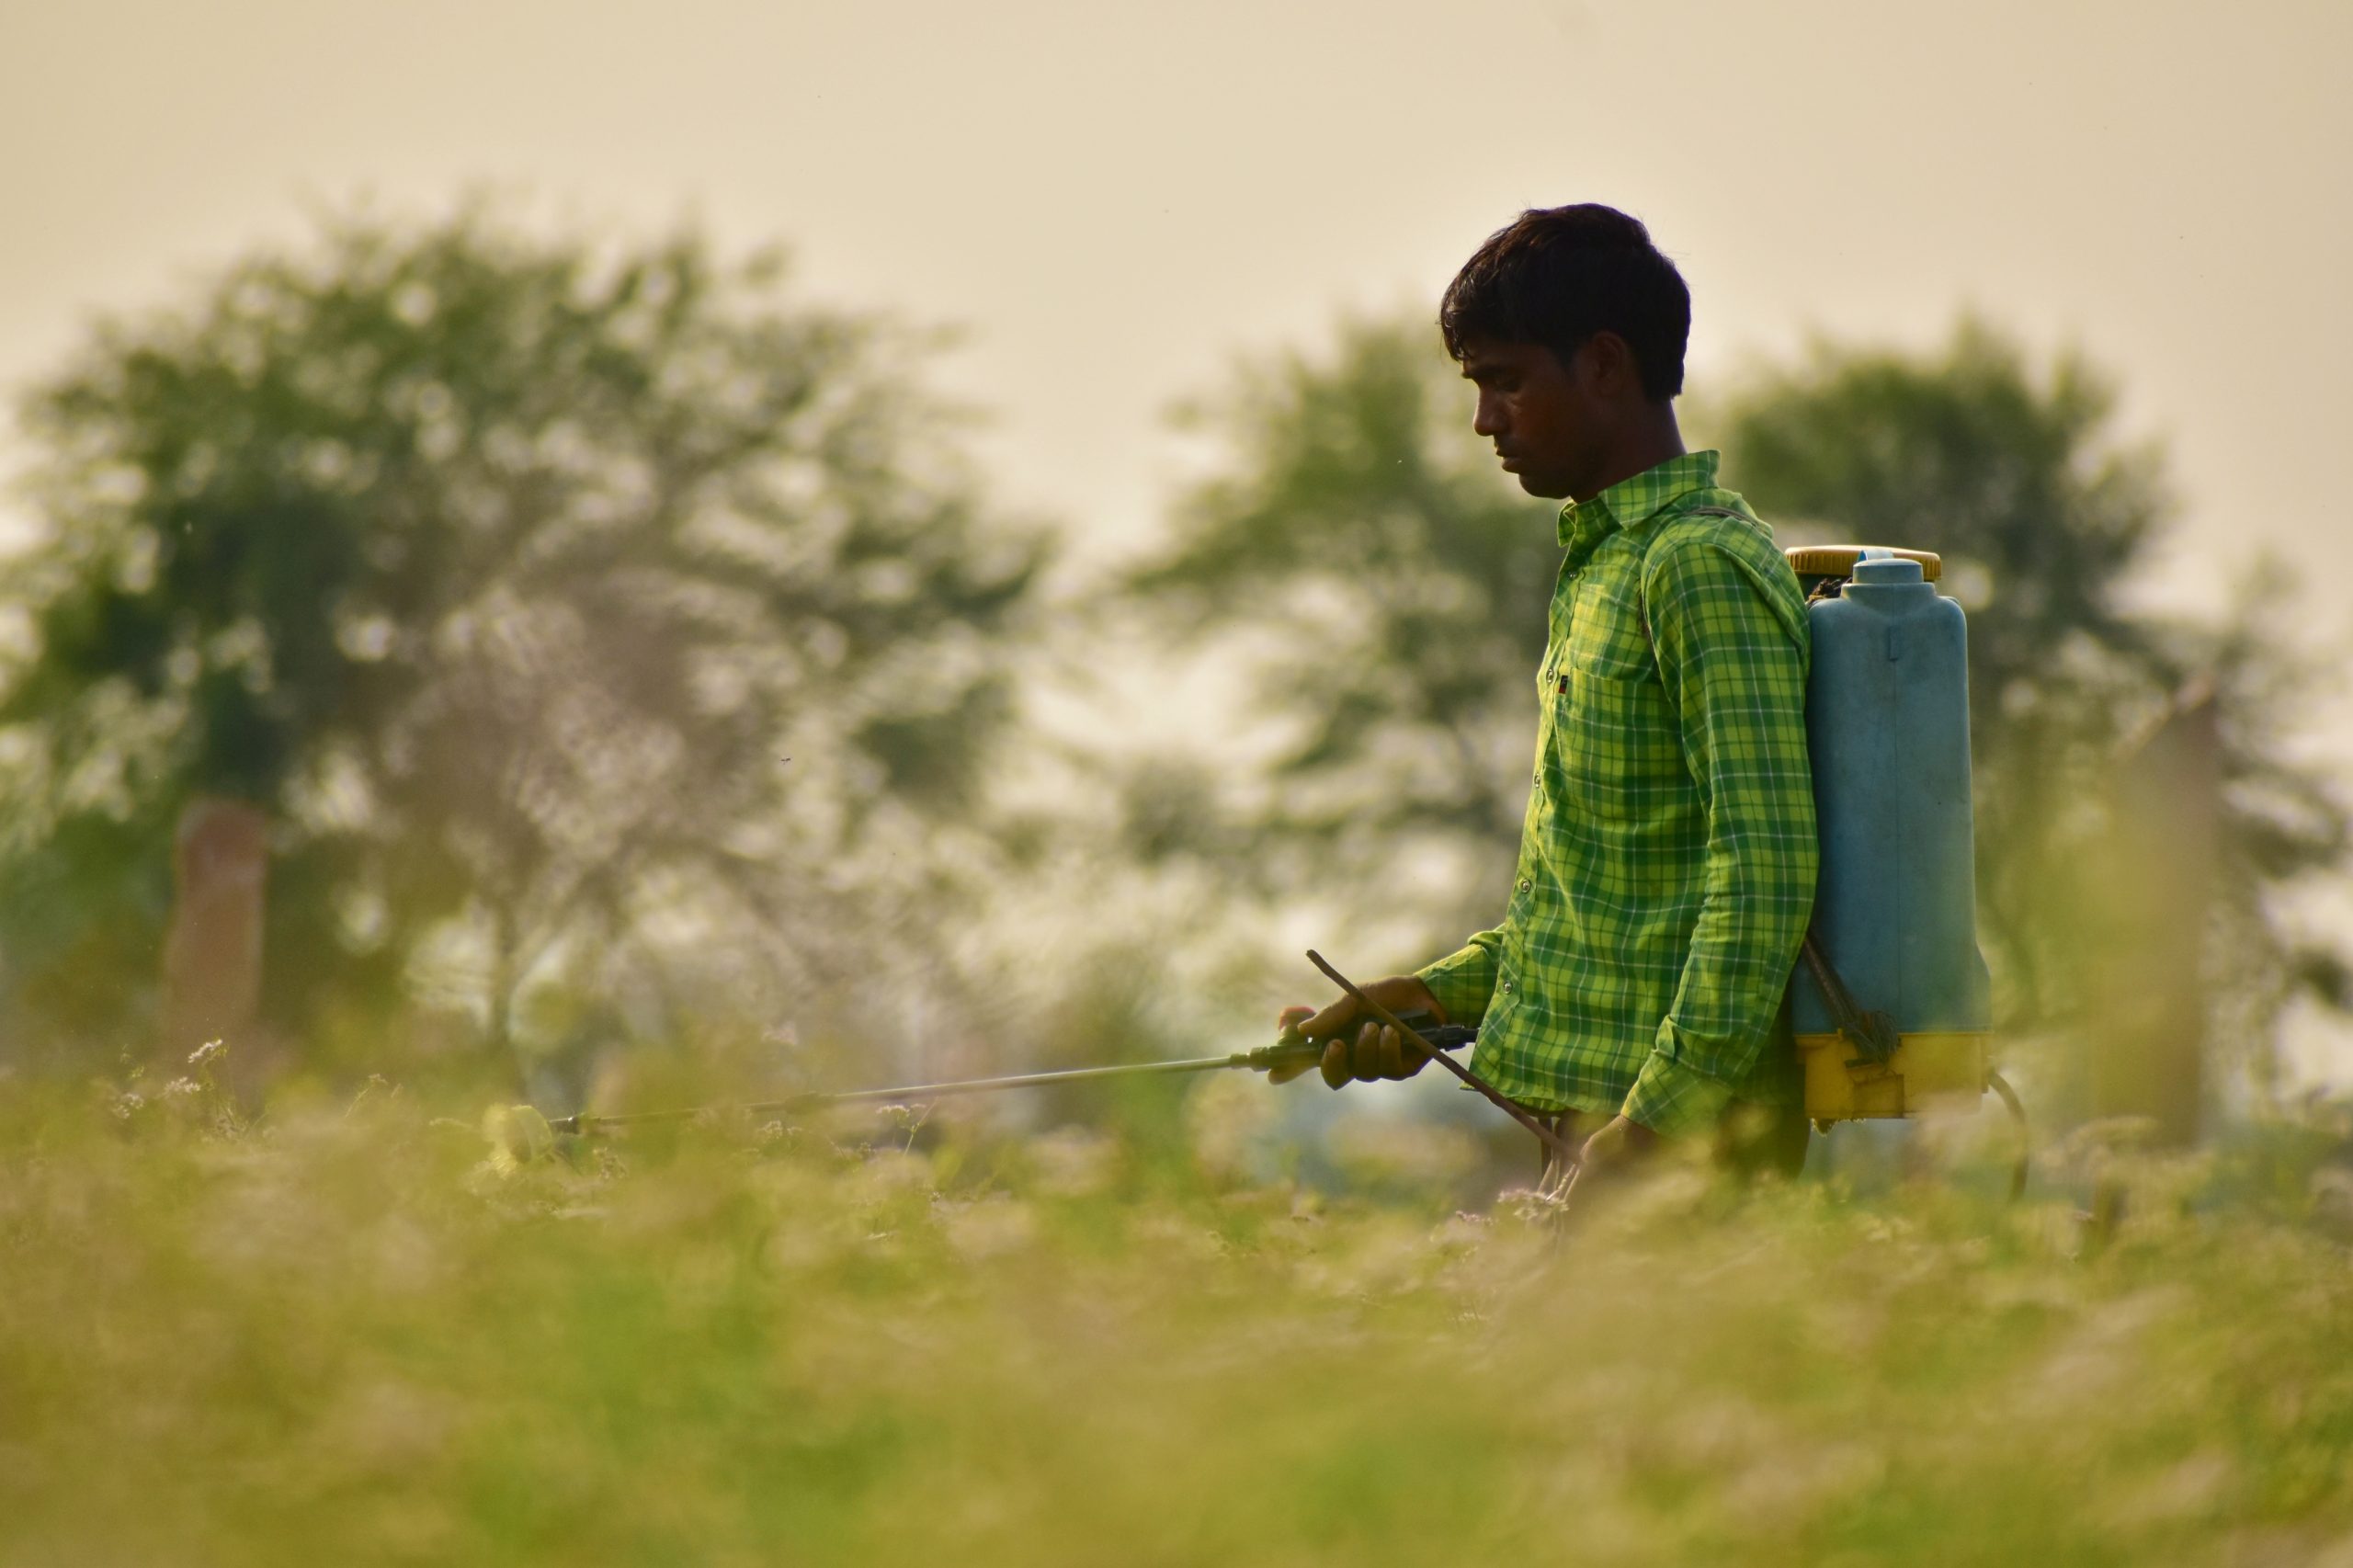 Man spraying pesticide in a field